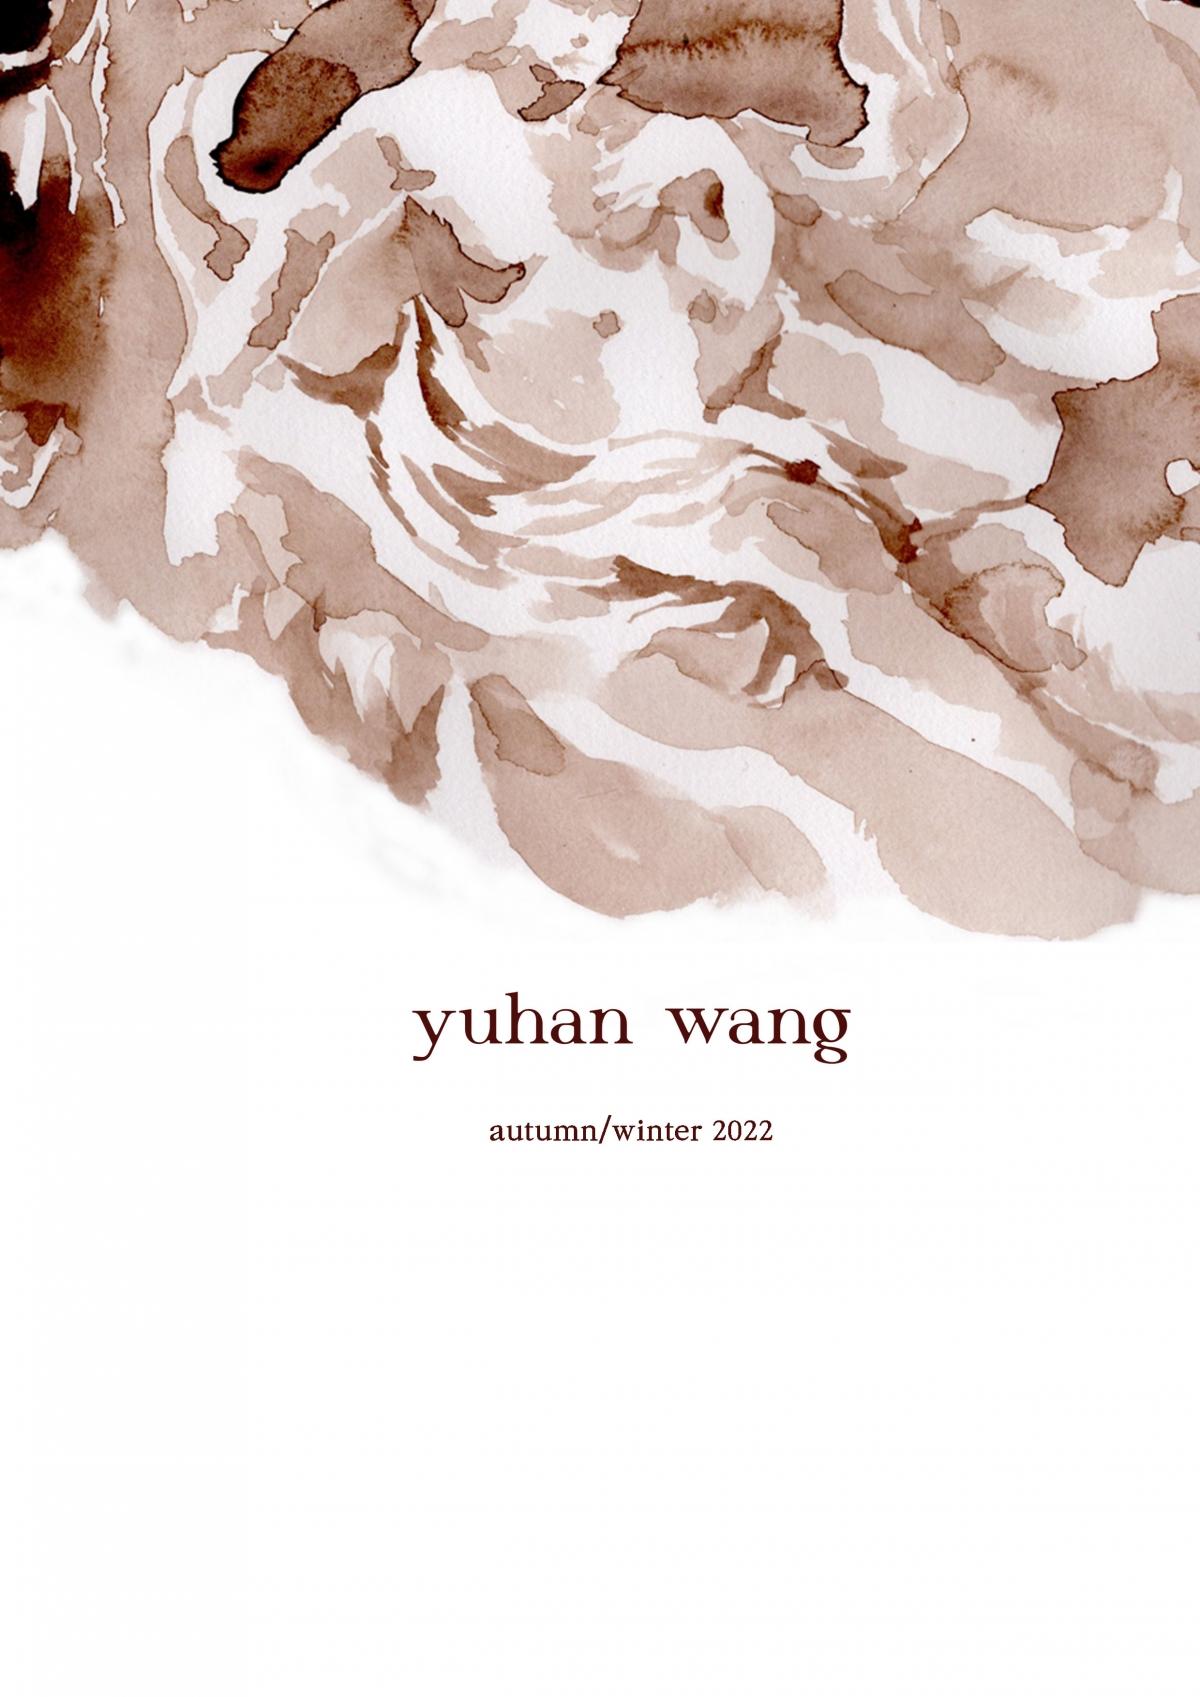 yuhan wang autumn/winter 2022